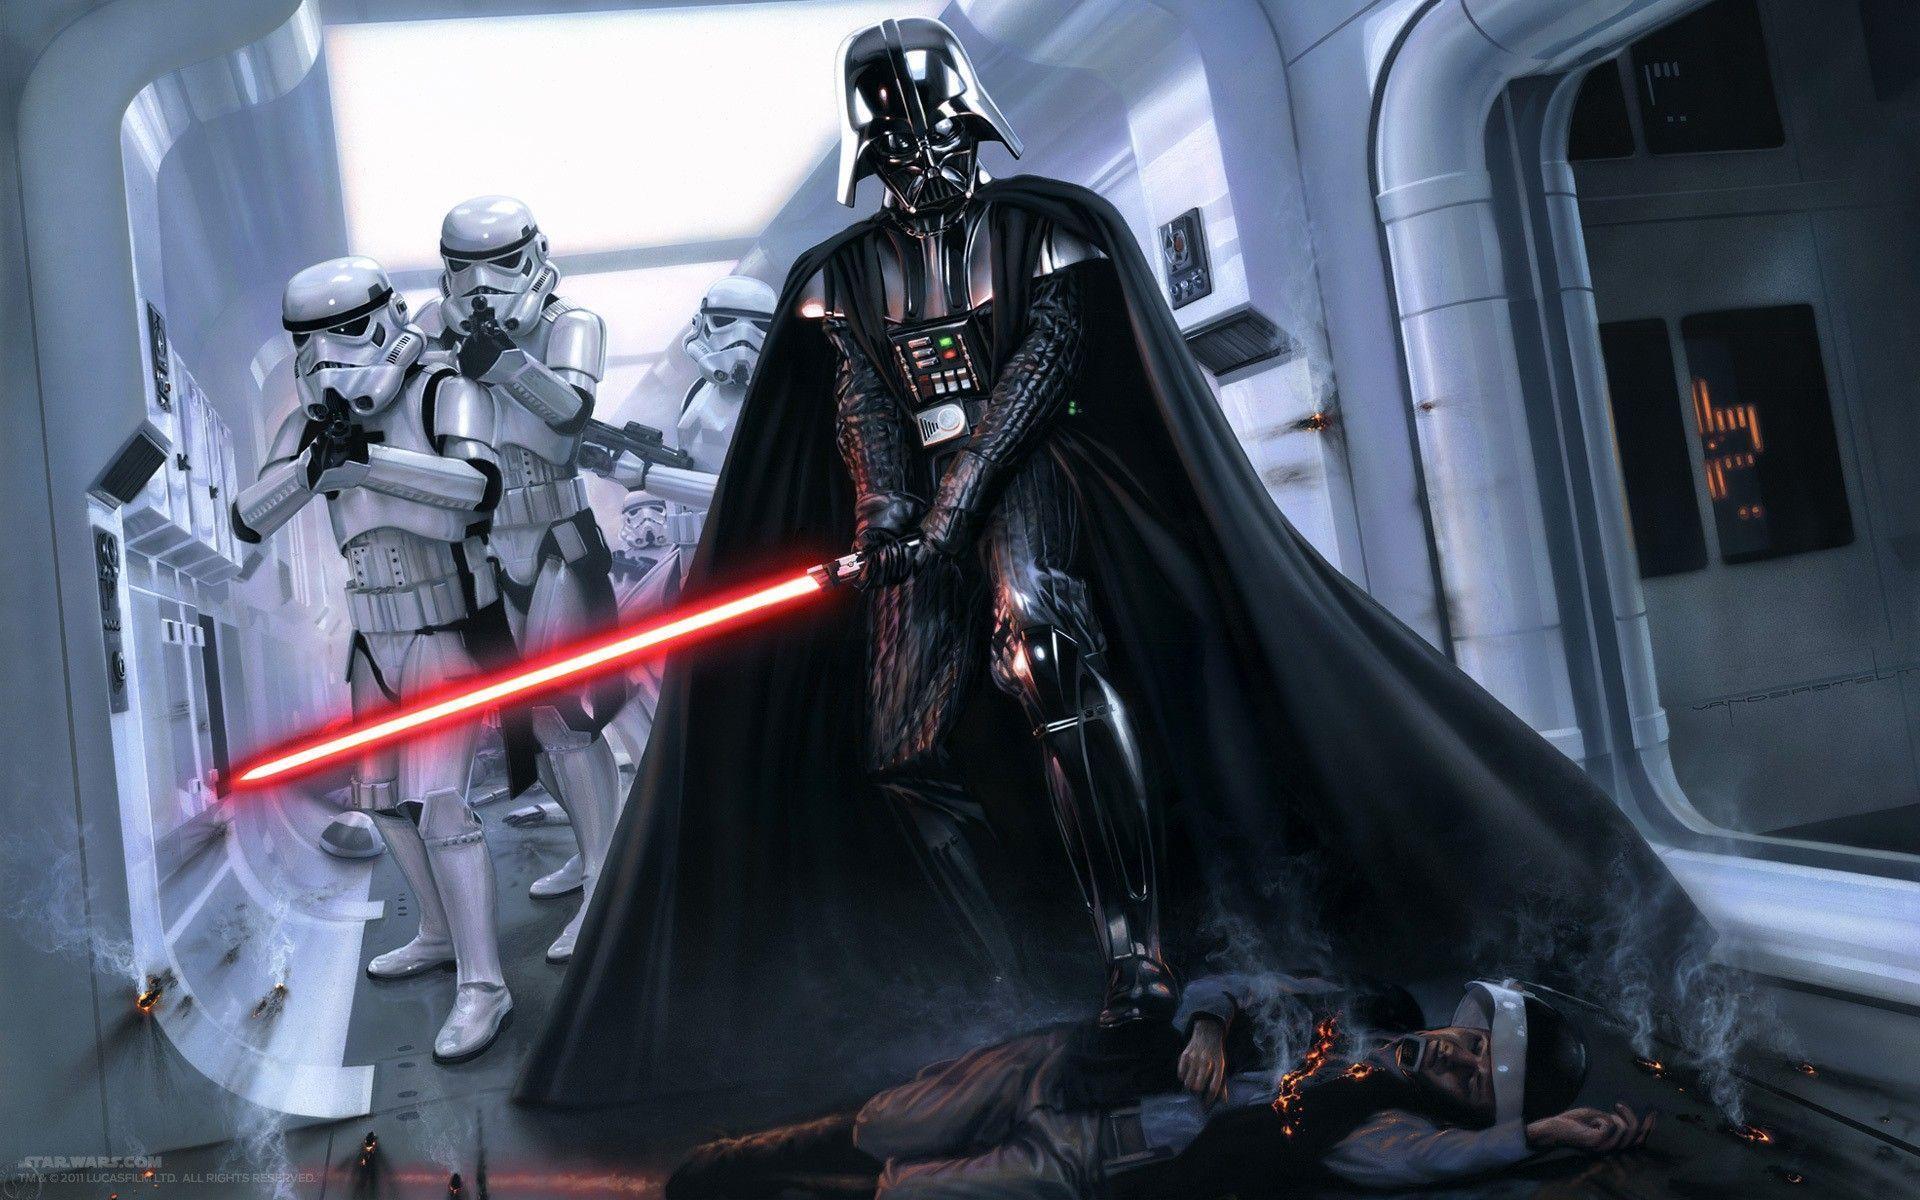 Darth Vader Star Wars Lightsaber Stormtrooper movies videogames